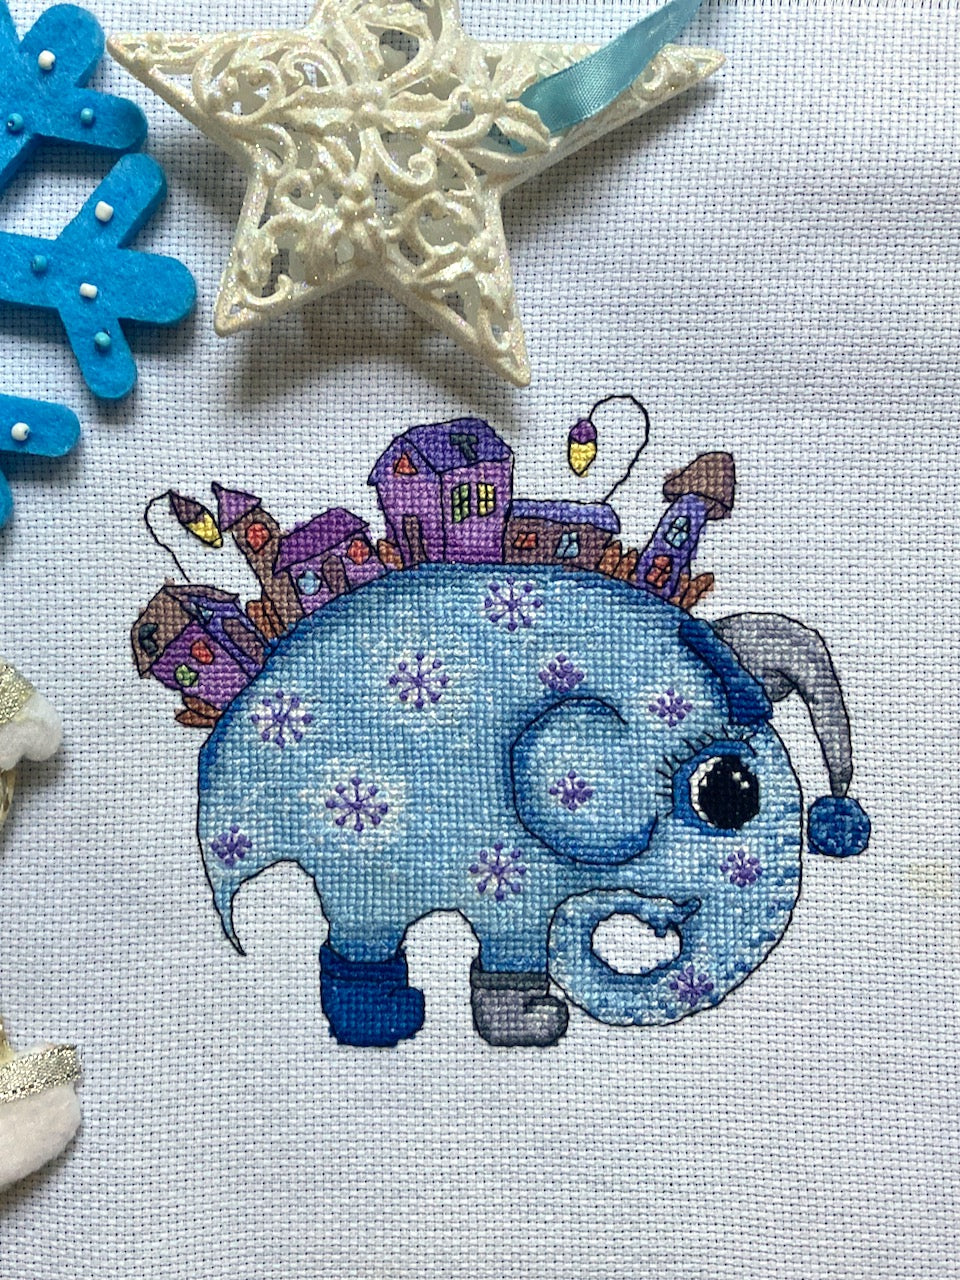  Magic elephant cross stitch pattern